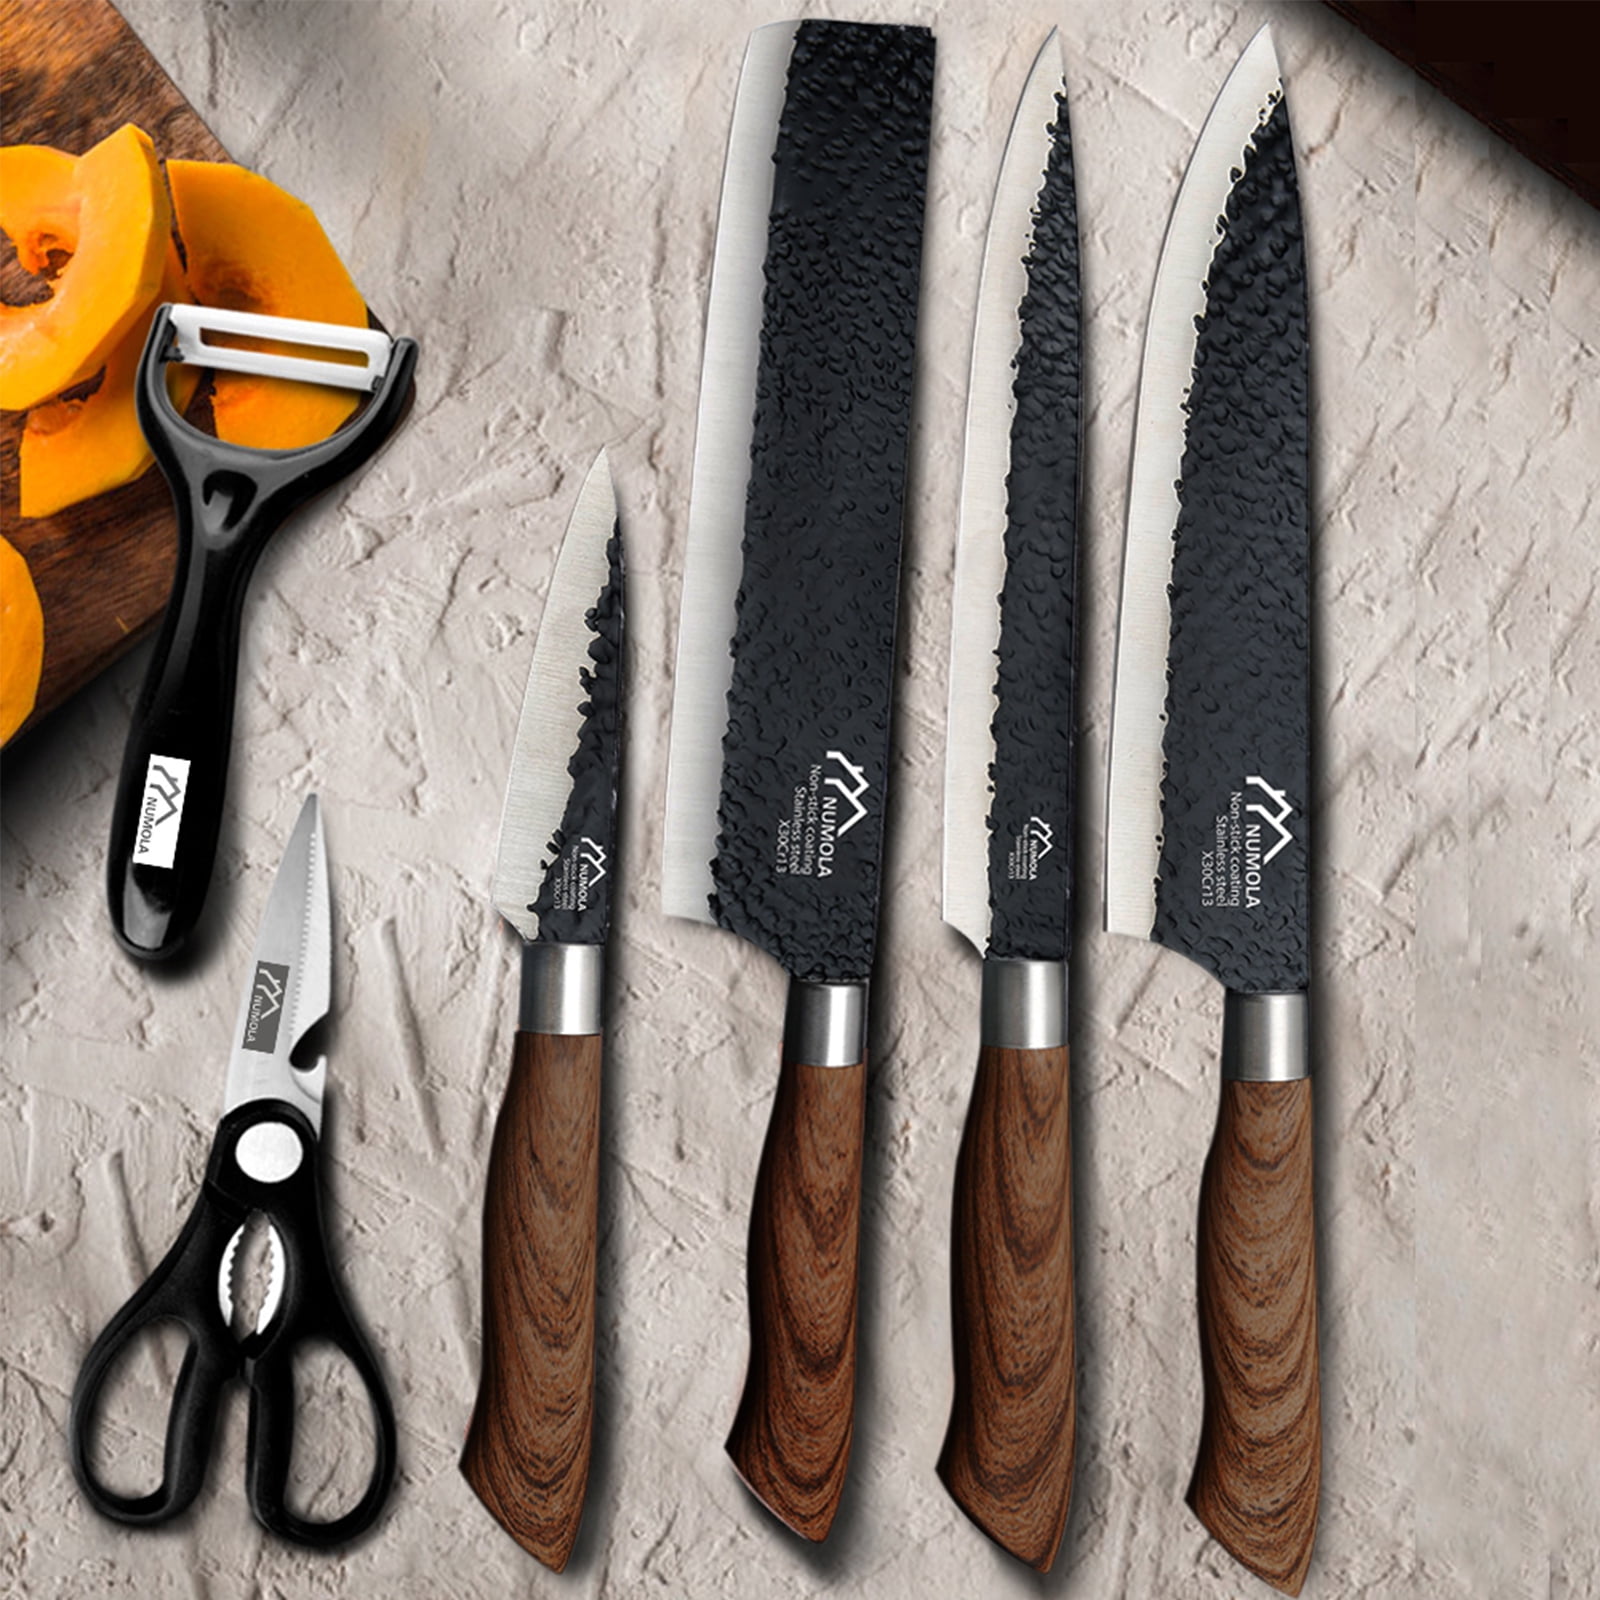  MICHELANGELO 18pc Kitchen Knife Set with Block, Super Sharp  Black Knife Set, Versatile Chef Knife Set with Knife Sharpener & Peeler,  Stainless Steel Knives for Kitchen, 6 Steak Knives Included: Home